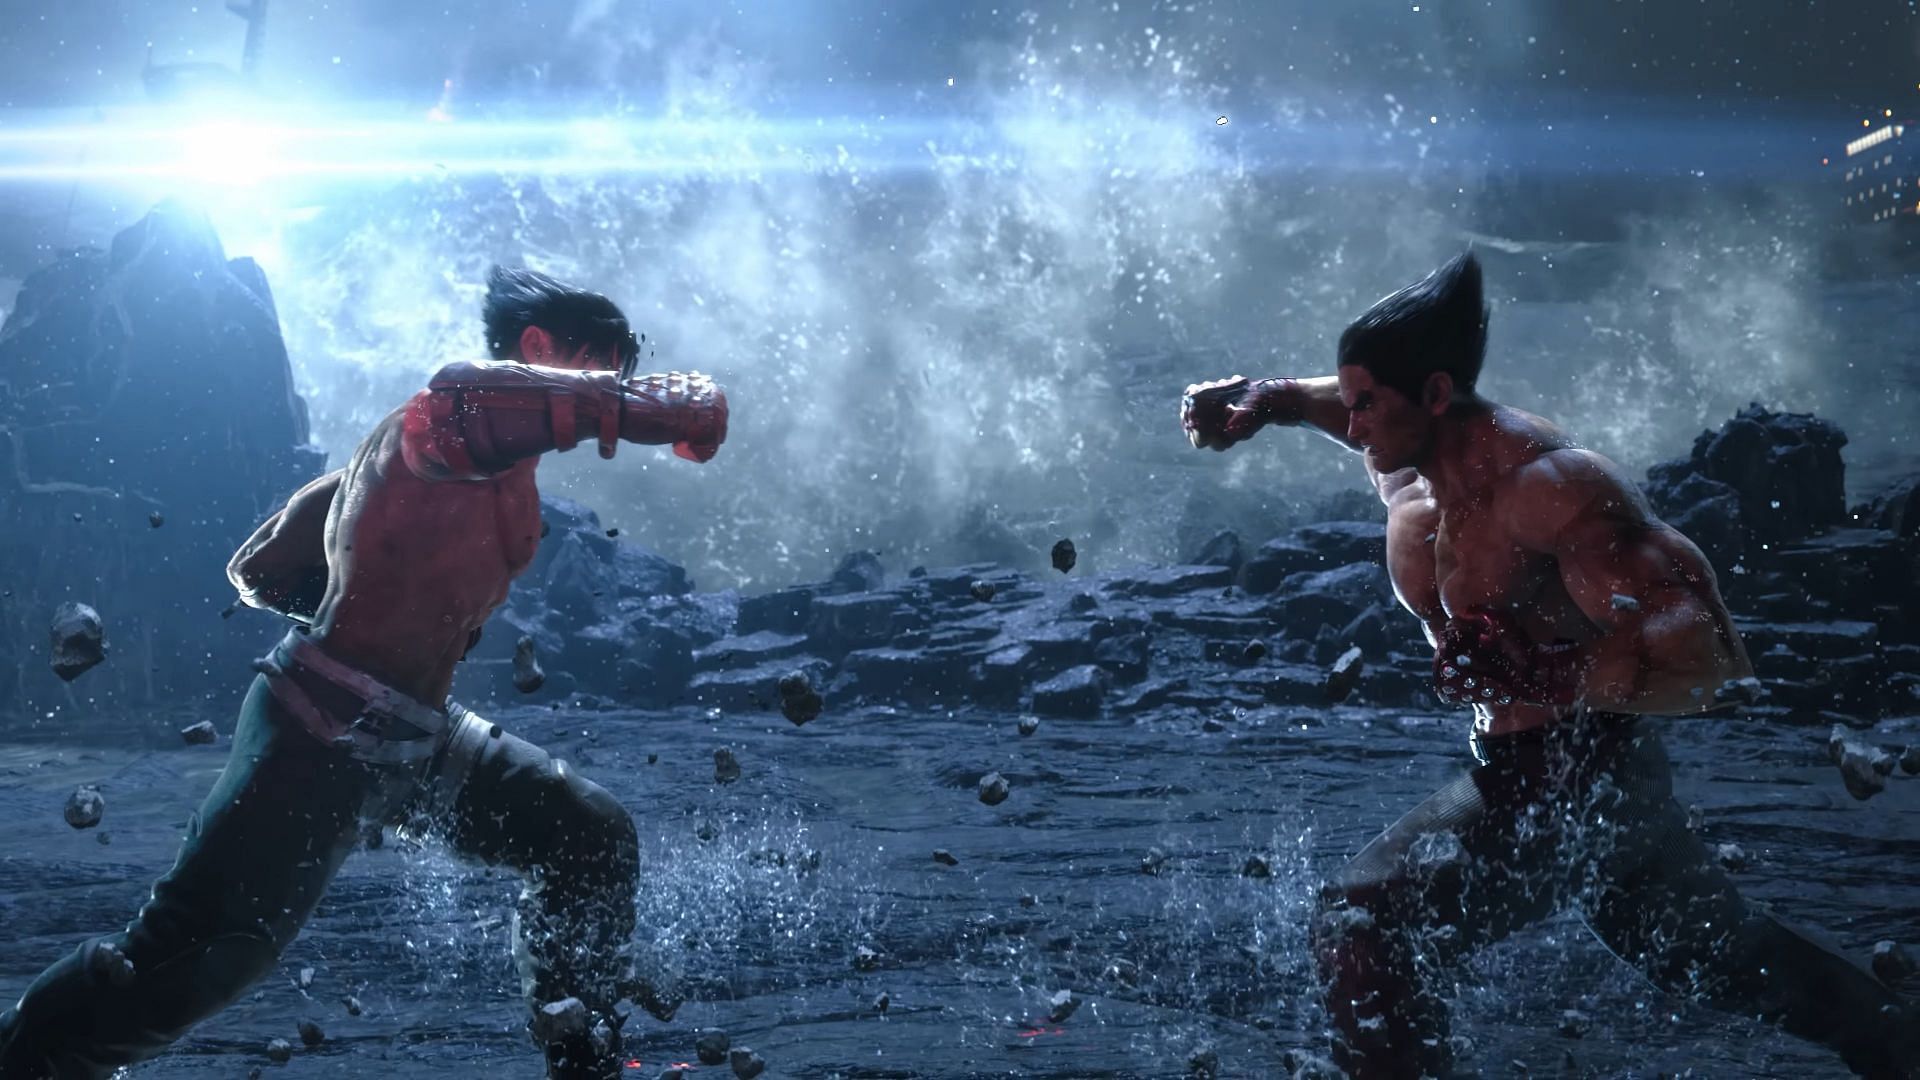 Screengrab of Jin fighting Kazuya from opening cinematics